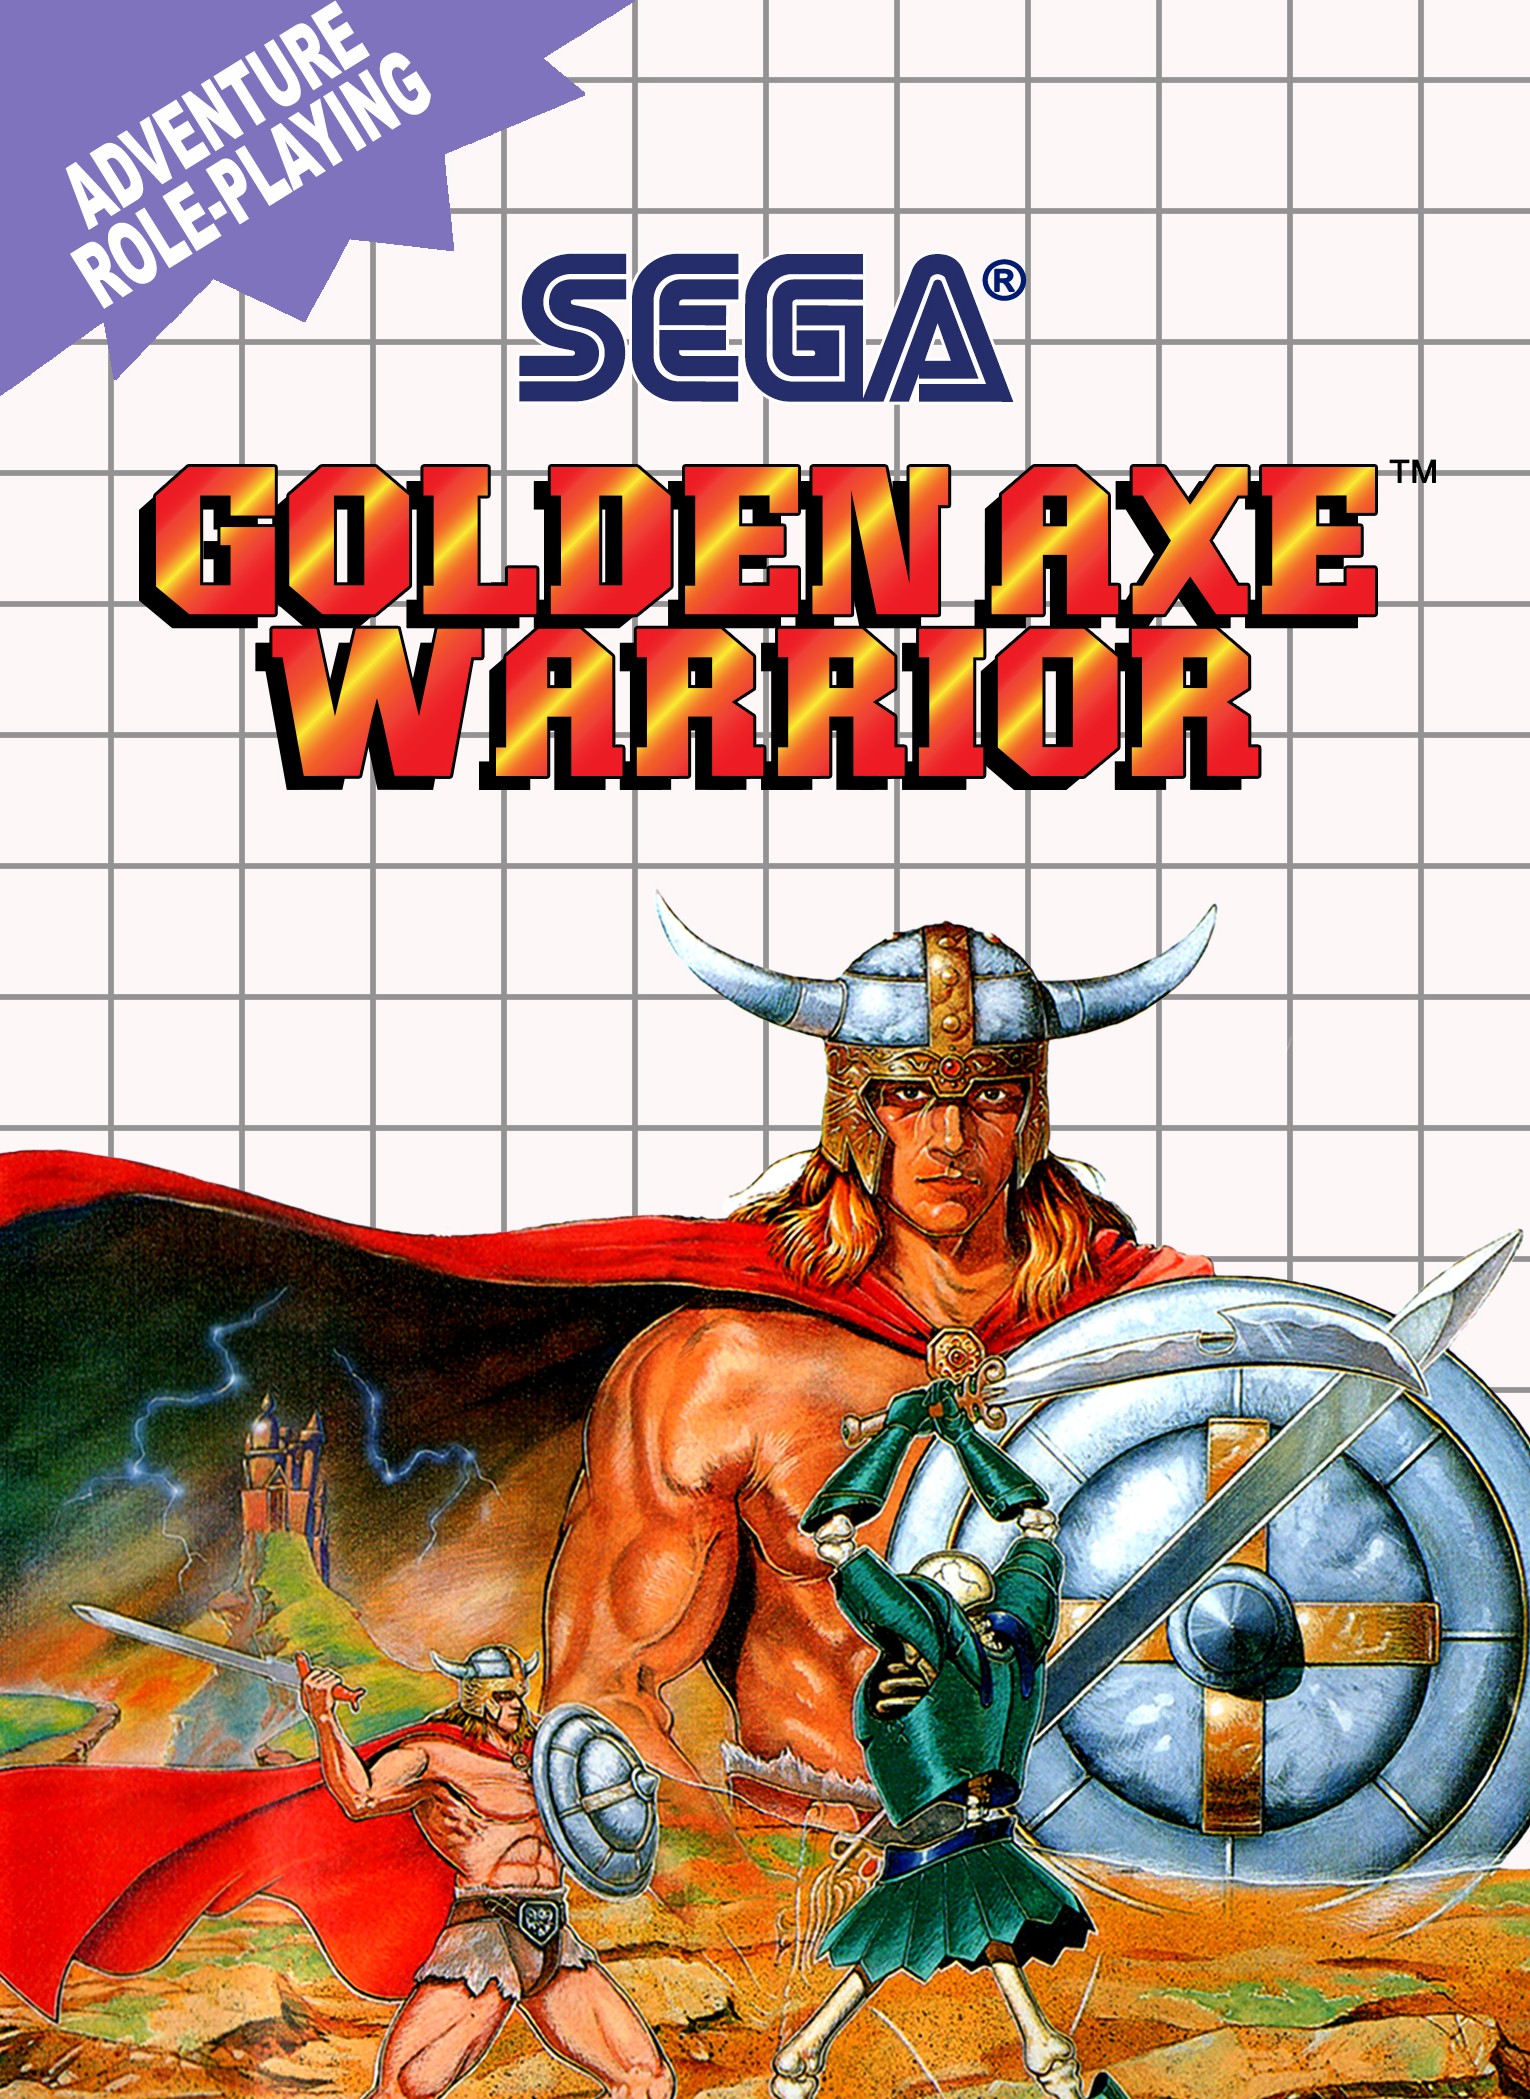 'Golden Axe: Warrior'